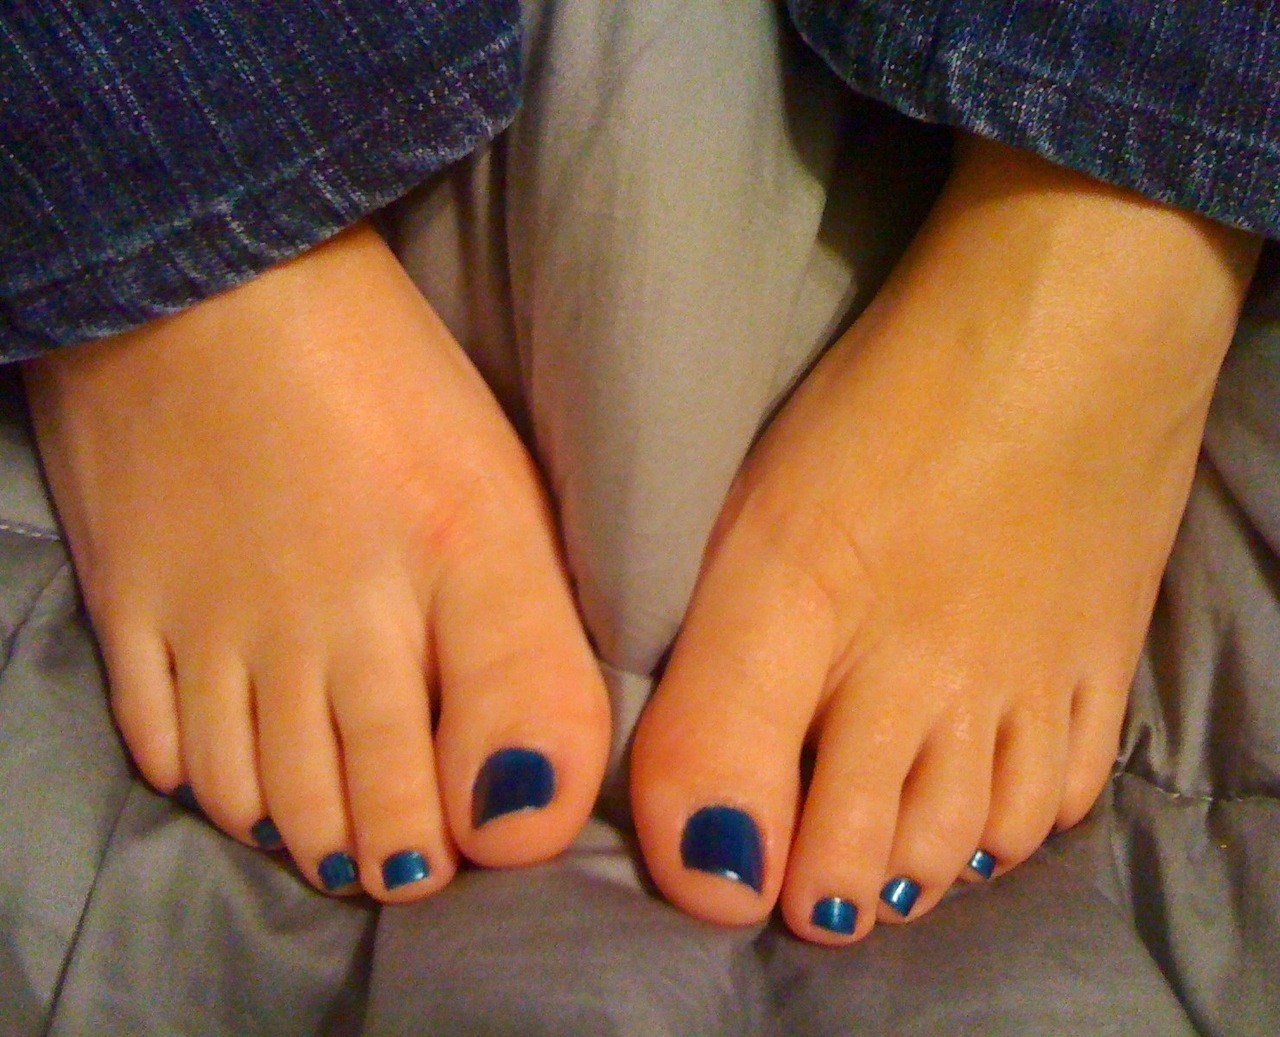 evangeline-hot-feet:Pretty feet worship and feets worship. Meet foot fetish girl